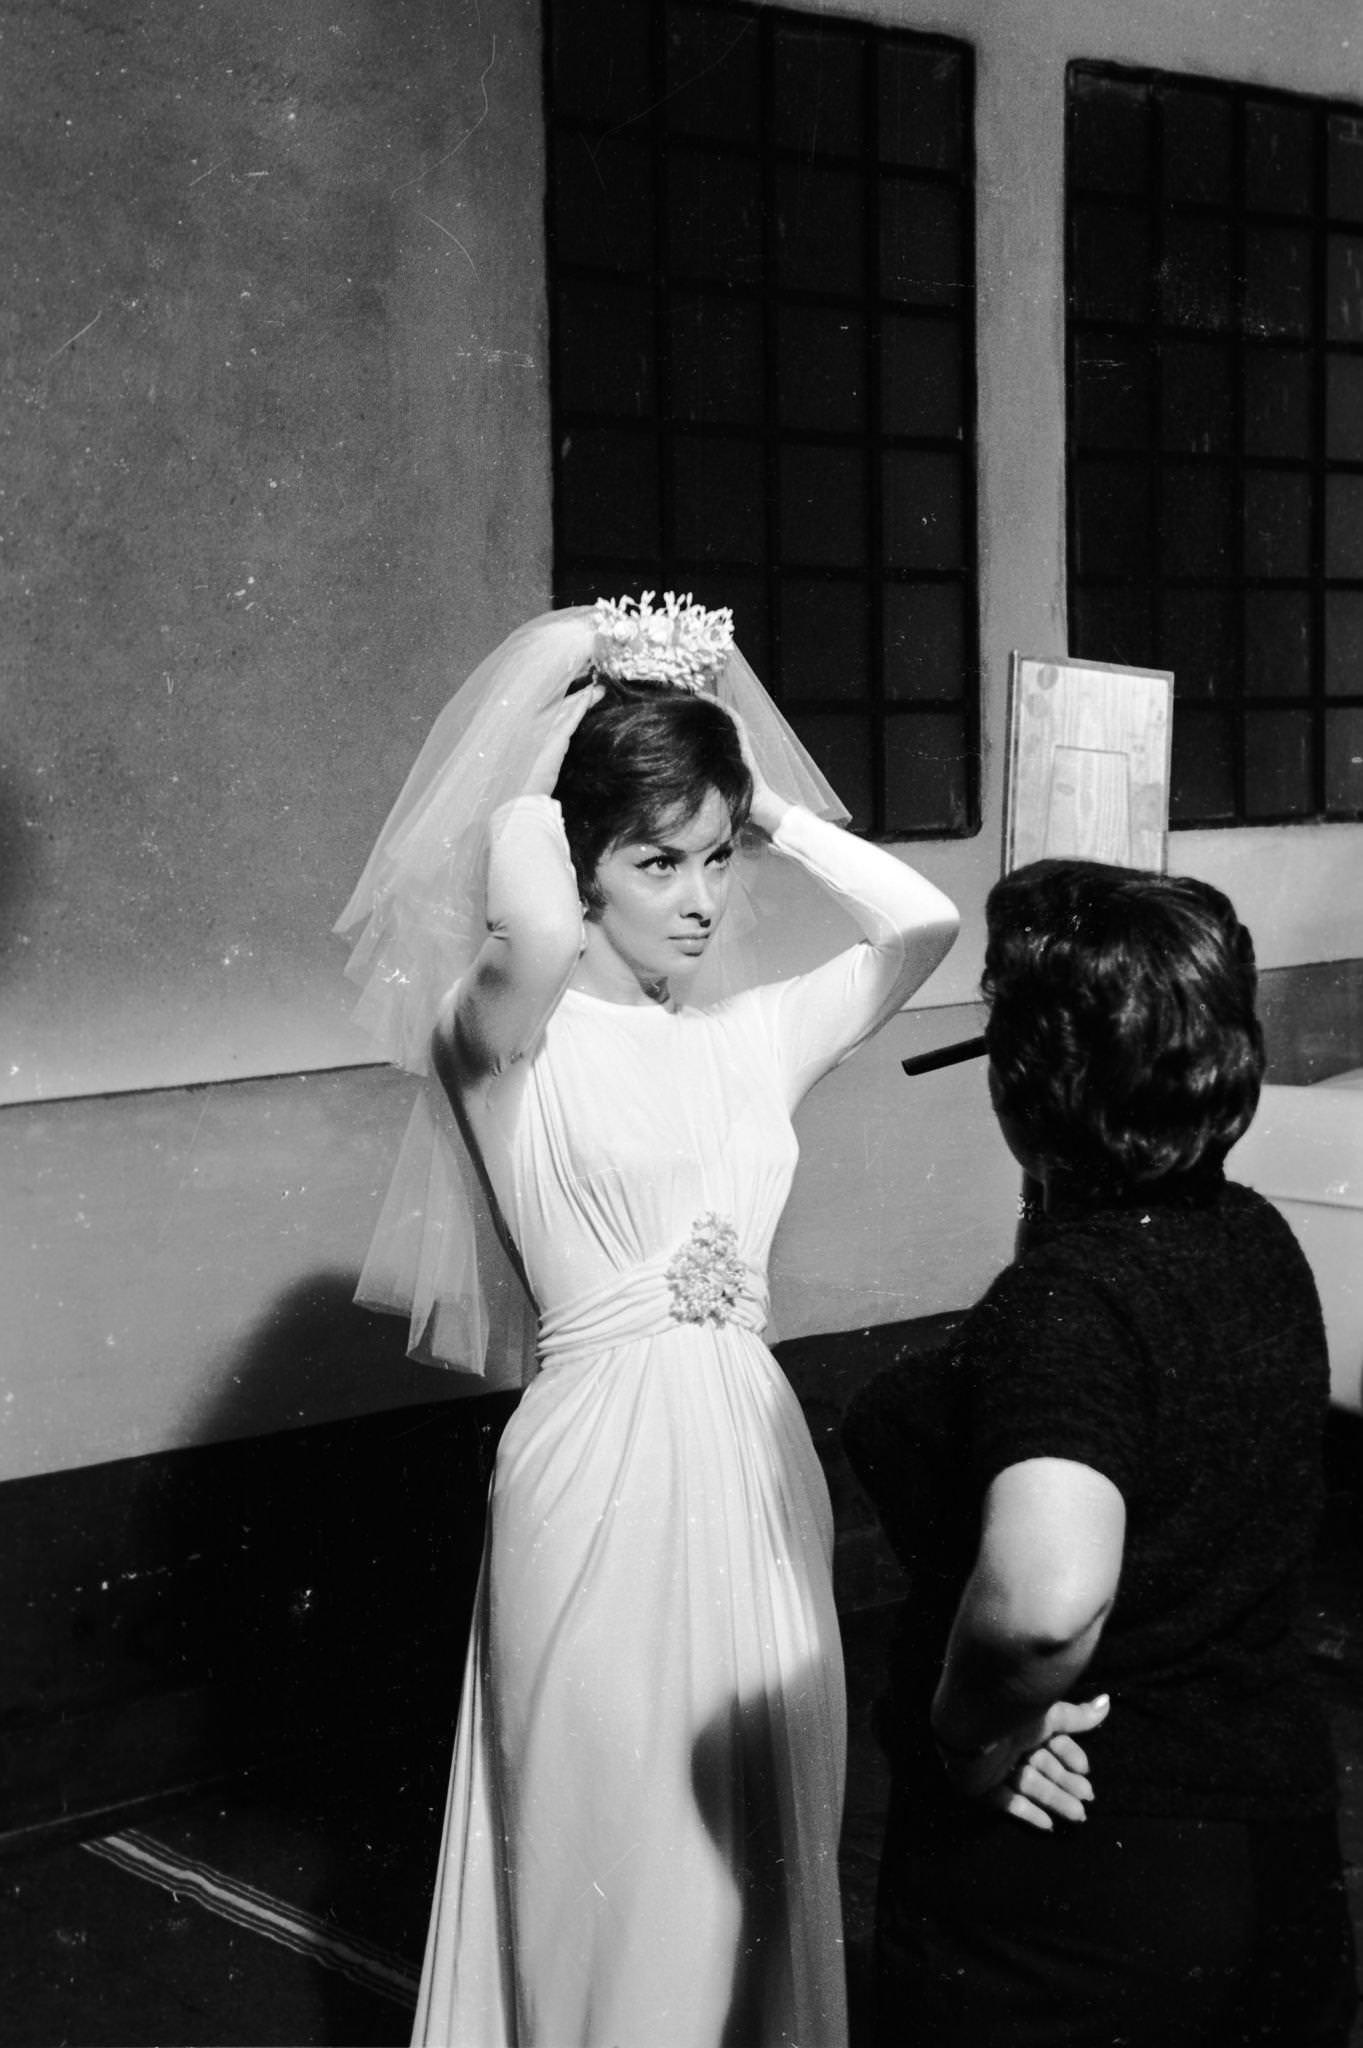 Gina Lollobrigida dressing as a bride for "Come September" in Roma, Italy, 1960.